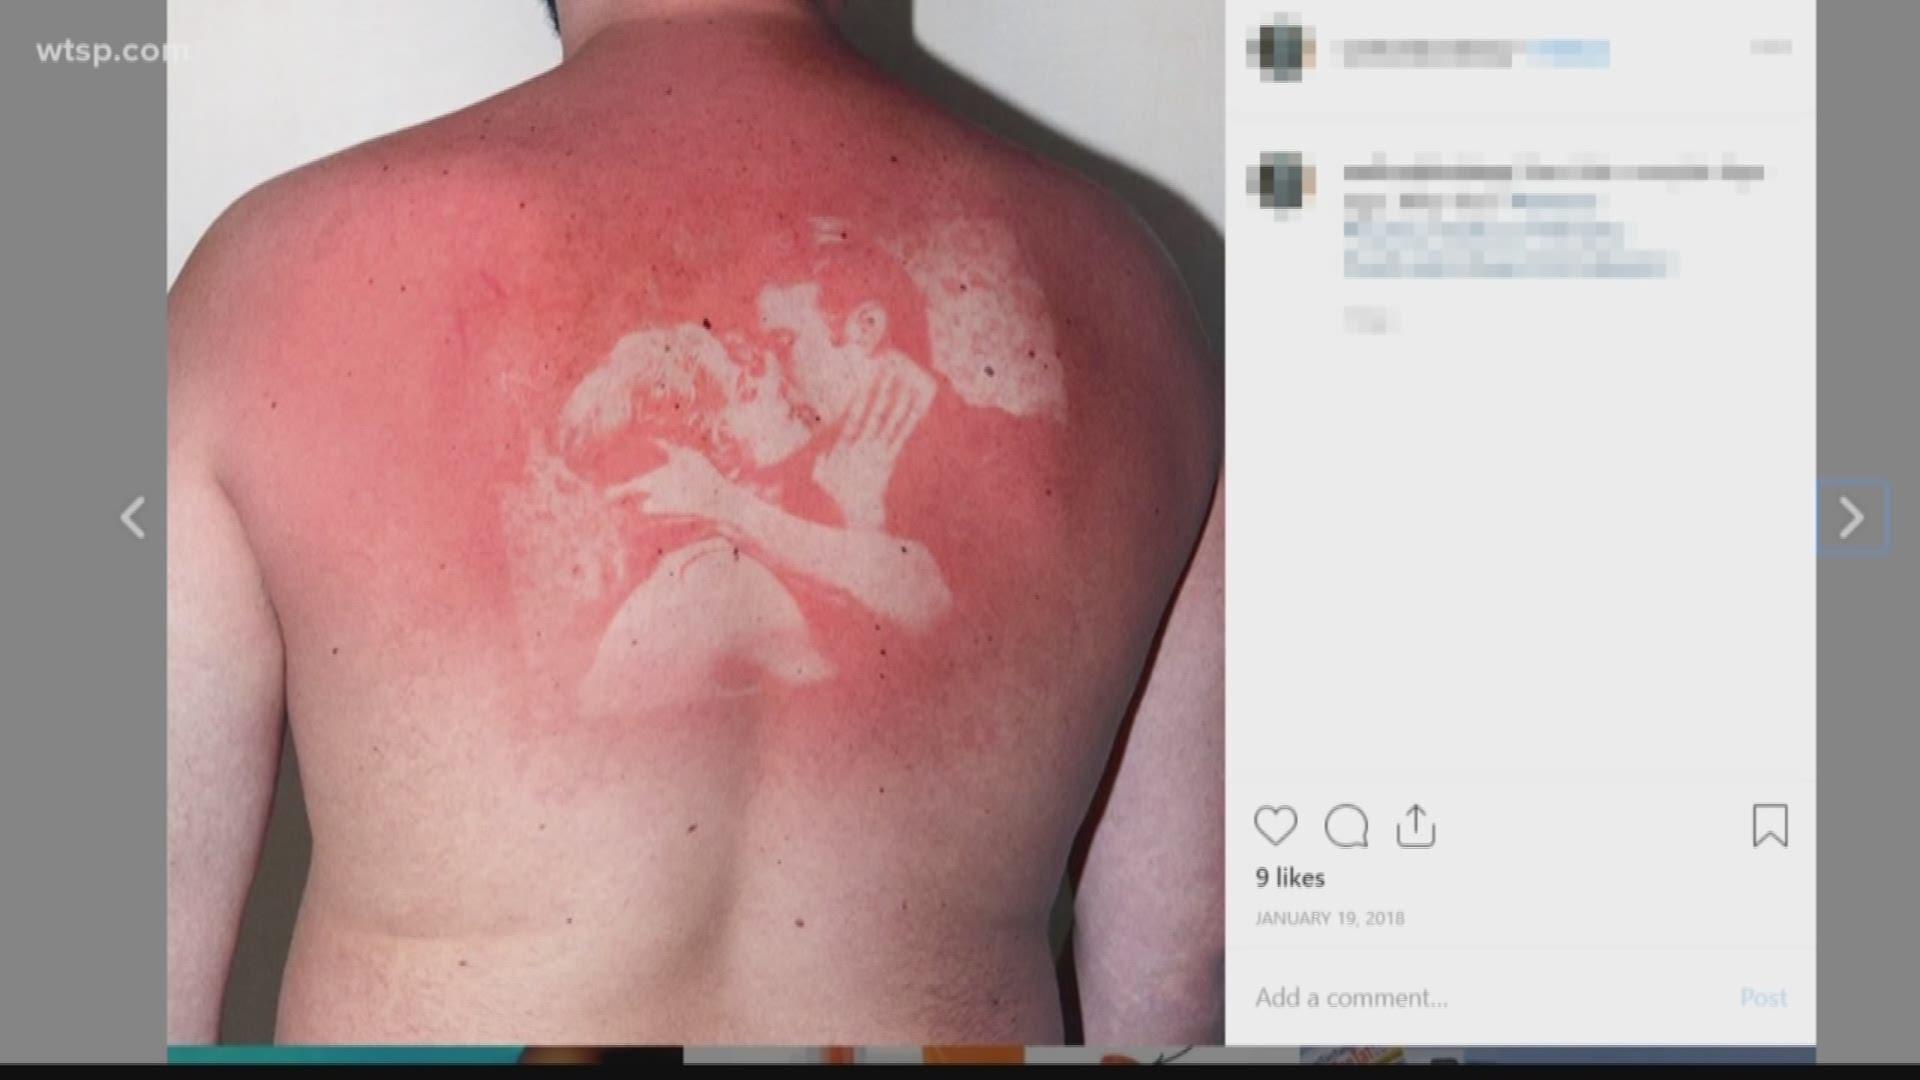 Trendy sunburn tattoos could be hazardous to your health  AZ Big Media